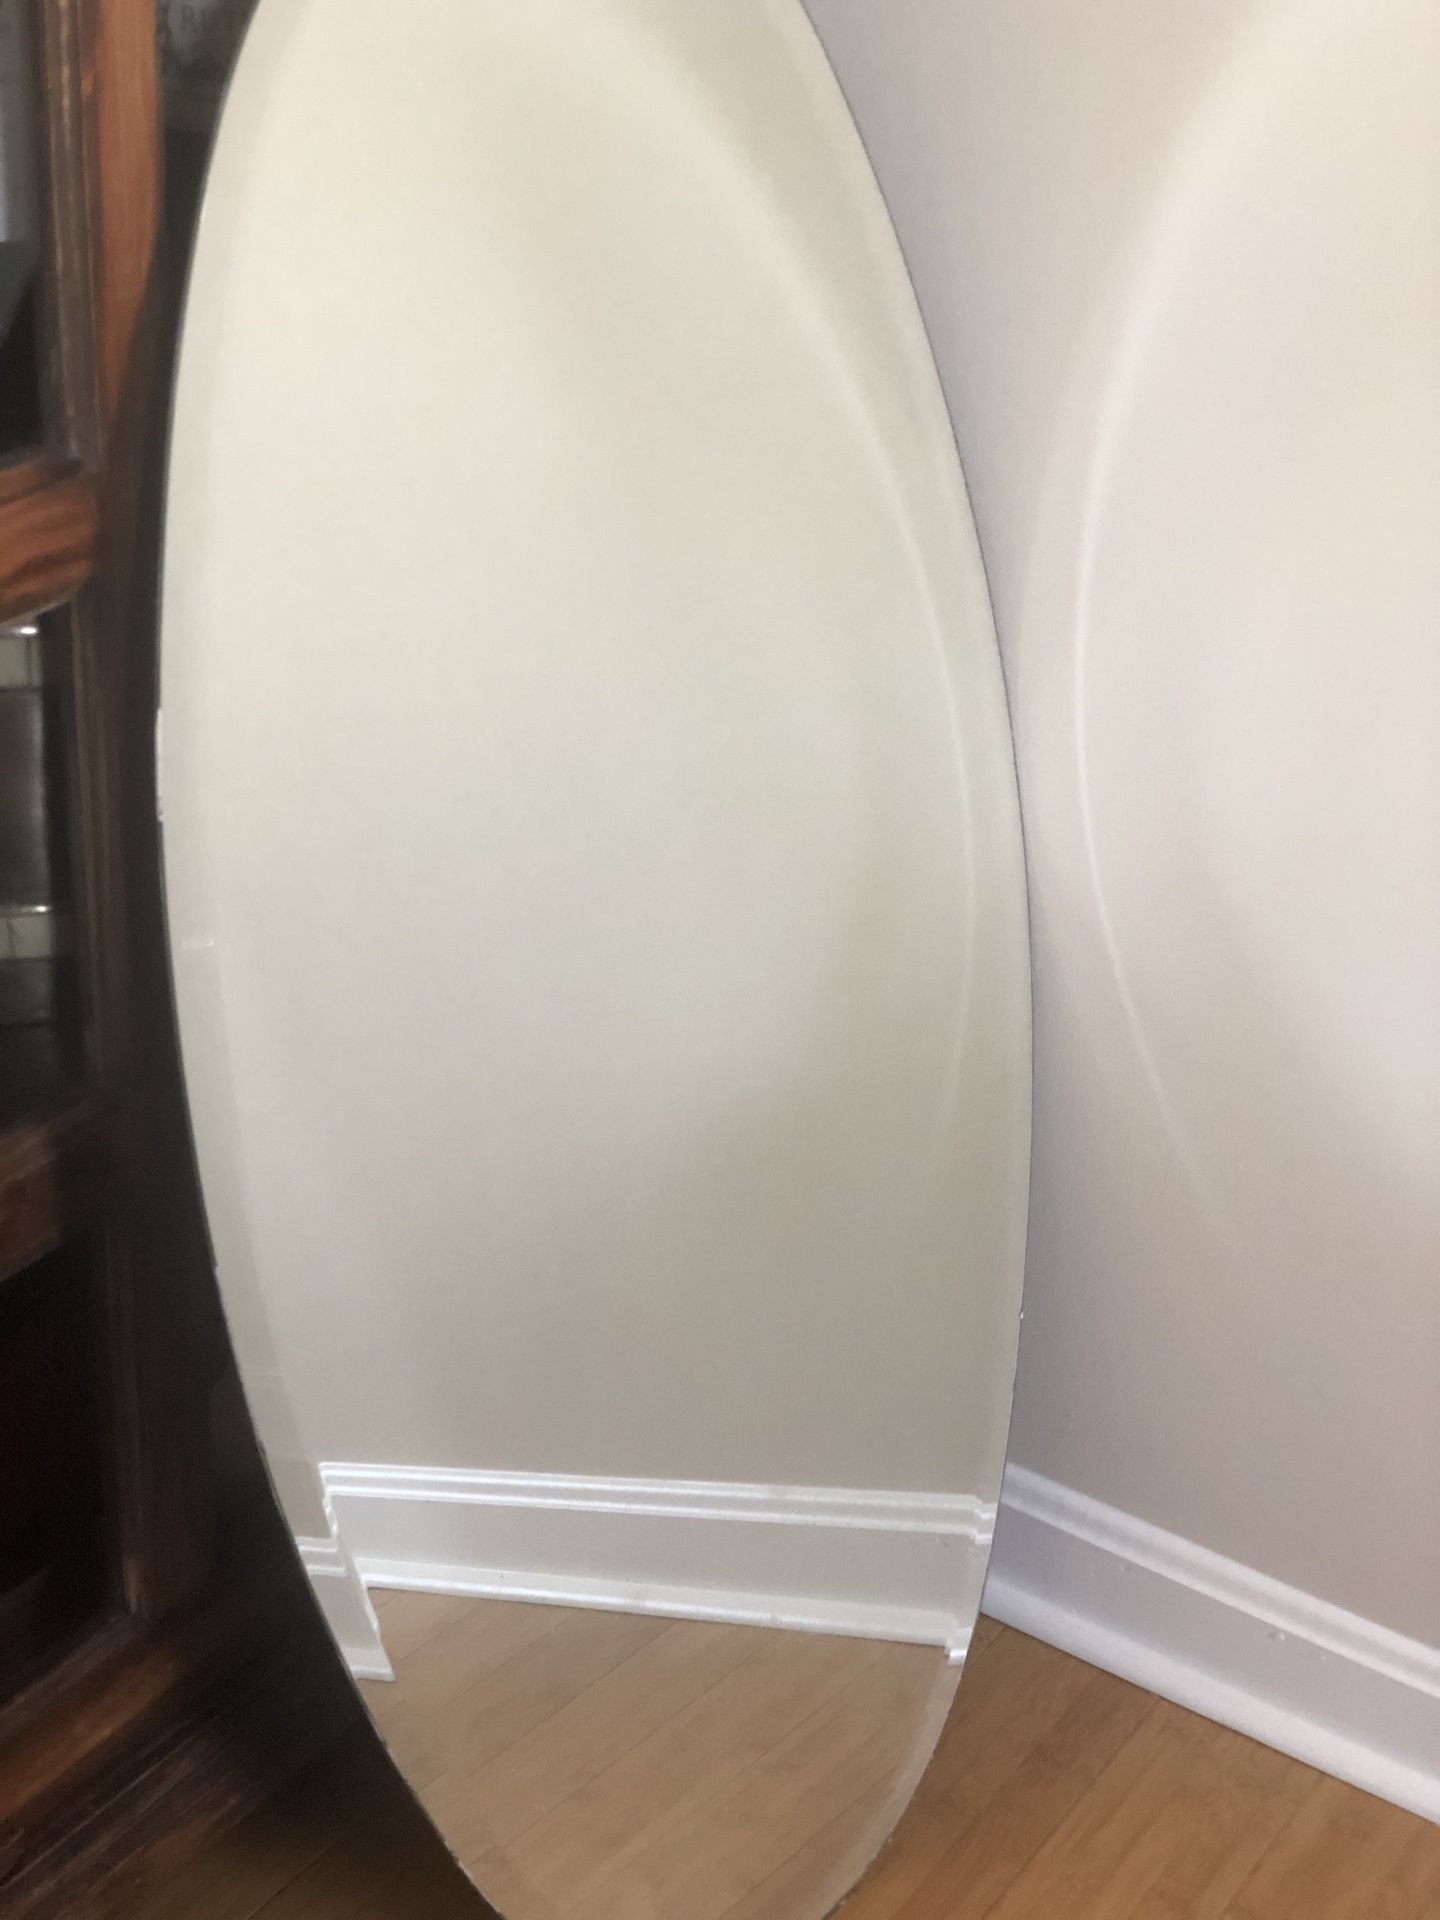 Oval mirror - like new